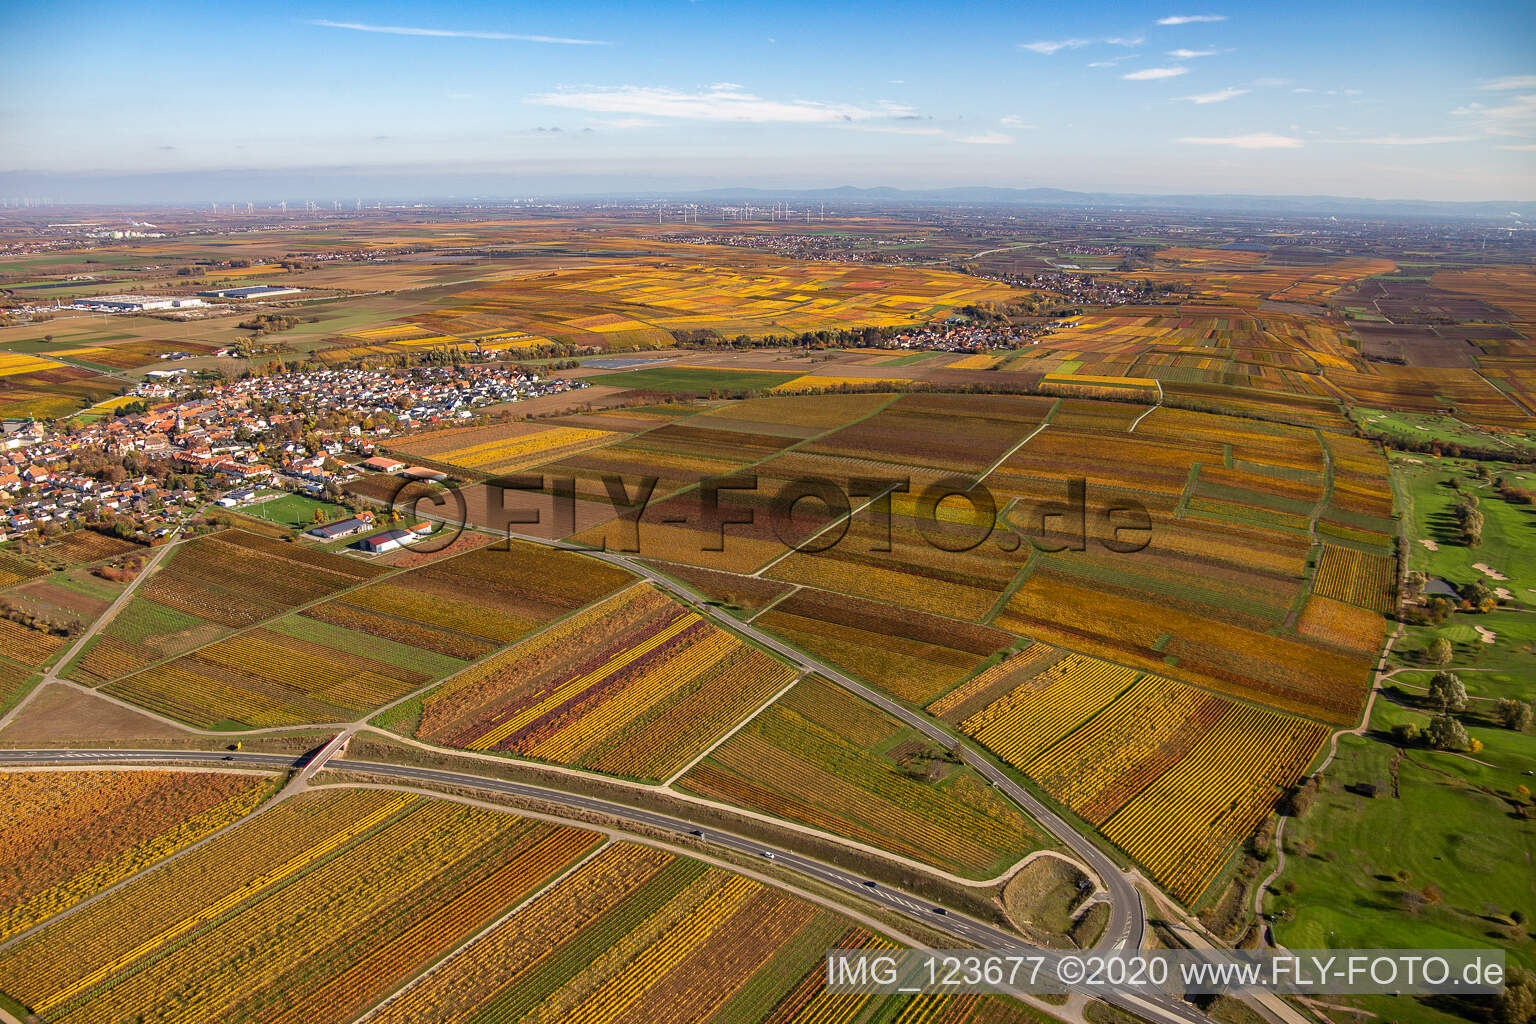 Kirchheim an der Weinstraße dans le département Rhénanie-Palatinat, Allemagne du point de vue du drone